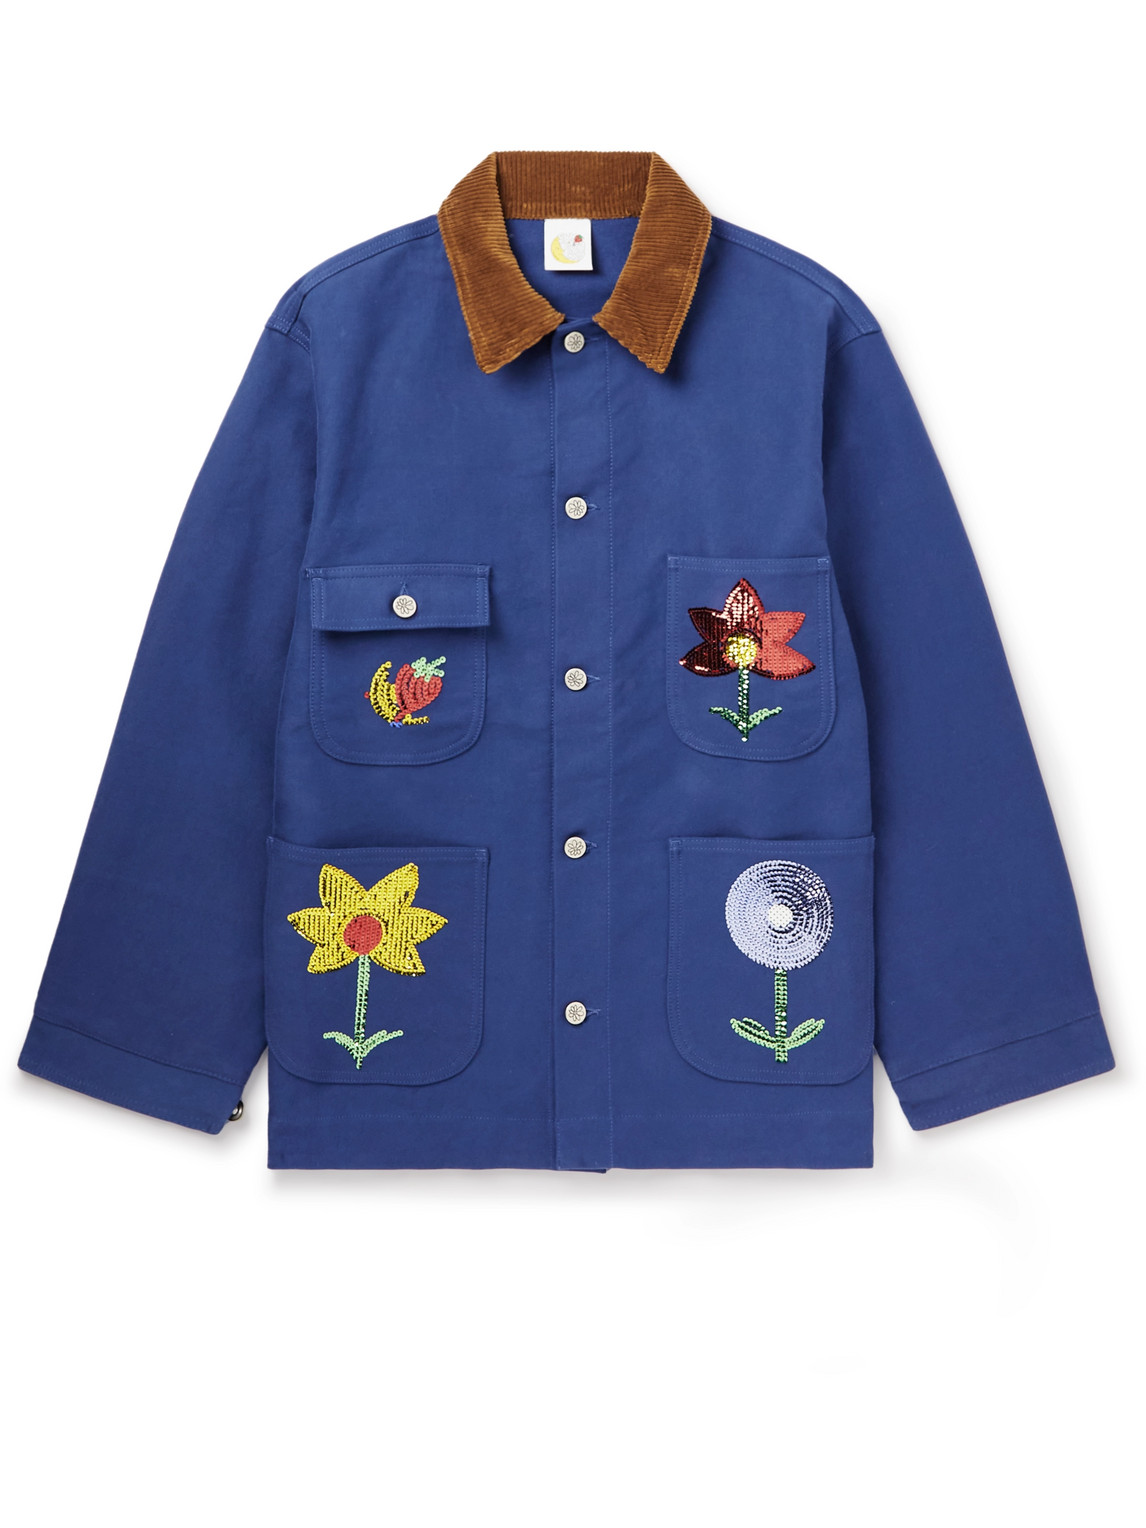 Sequin-Embellished Corduroy-Trimmed Cotton Chore Jacket